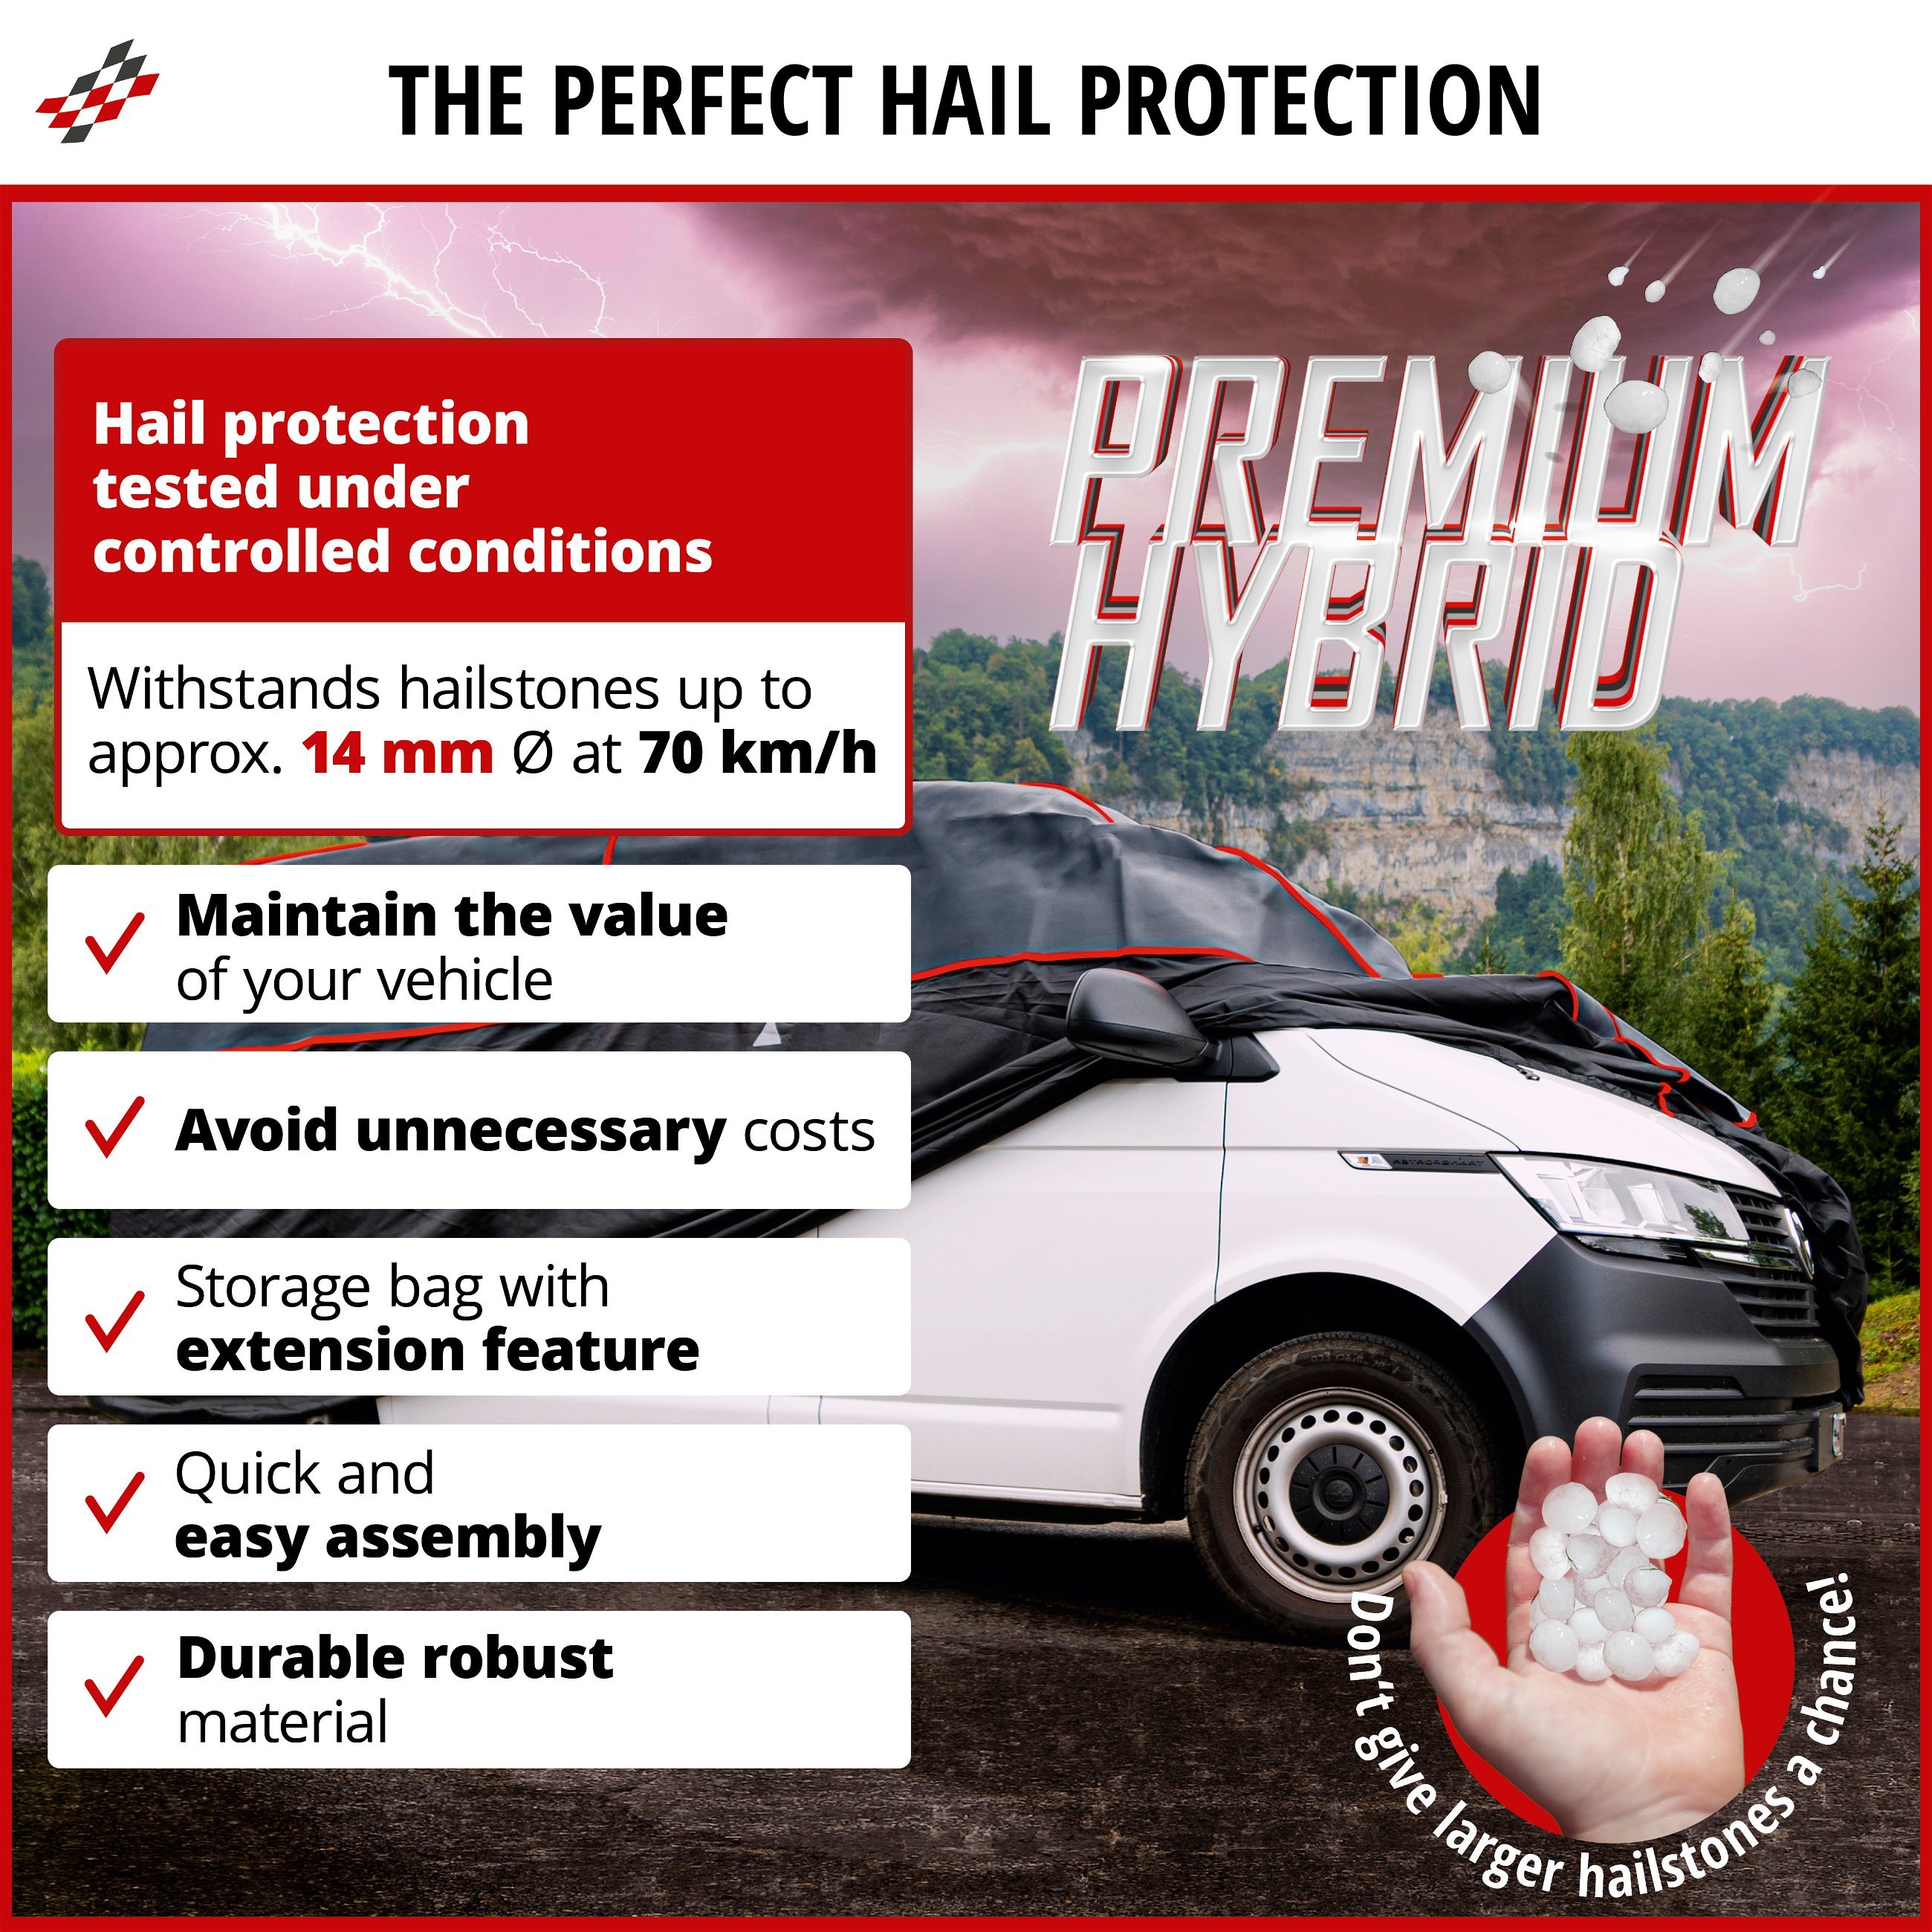 Bus hail protection cover Premium Hybrid size XL